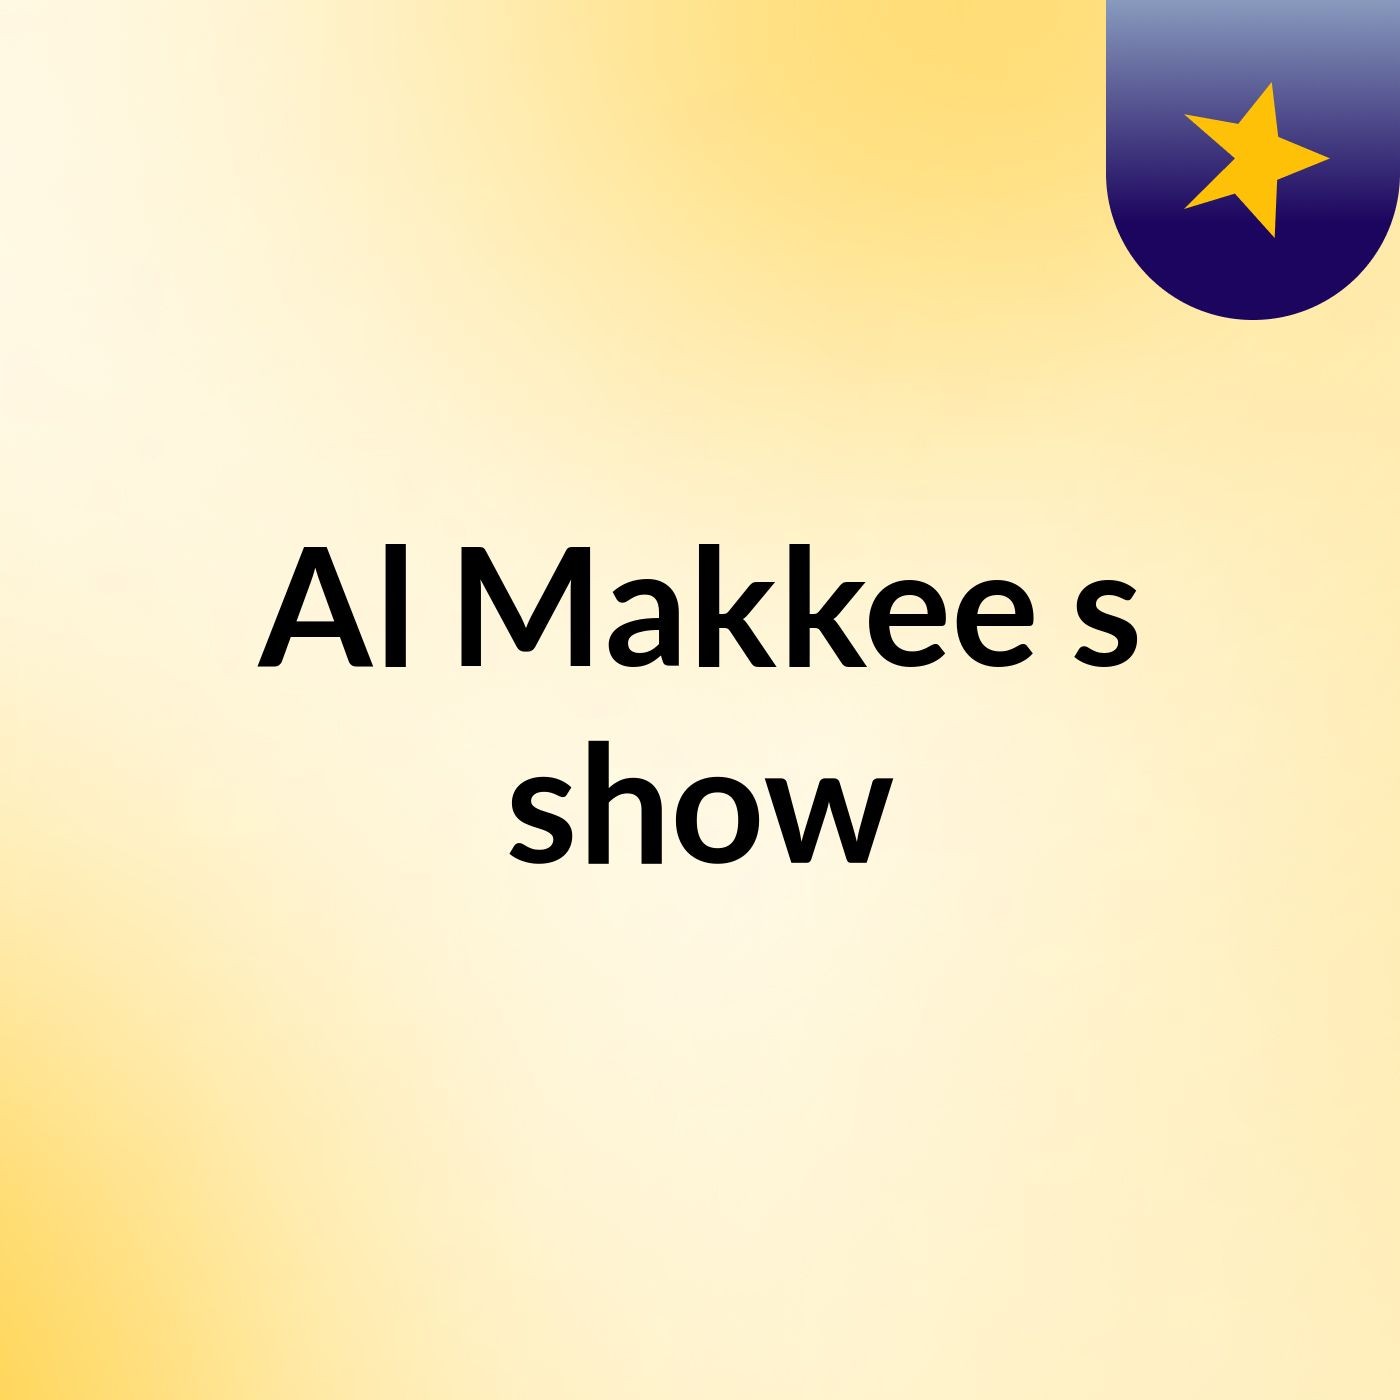 Al Makkee's show